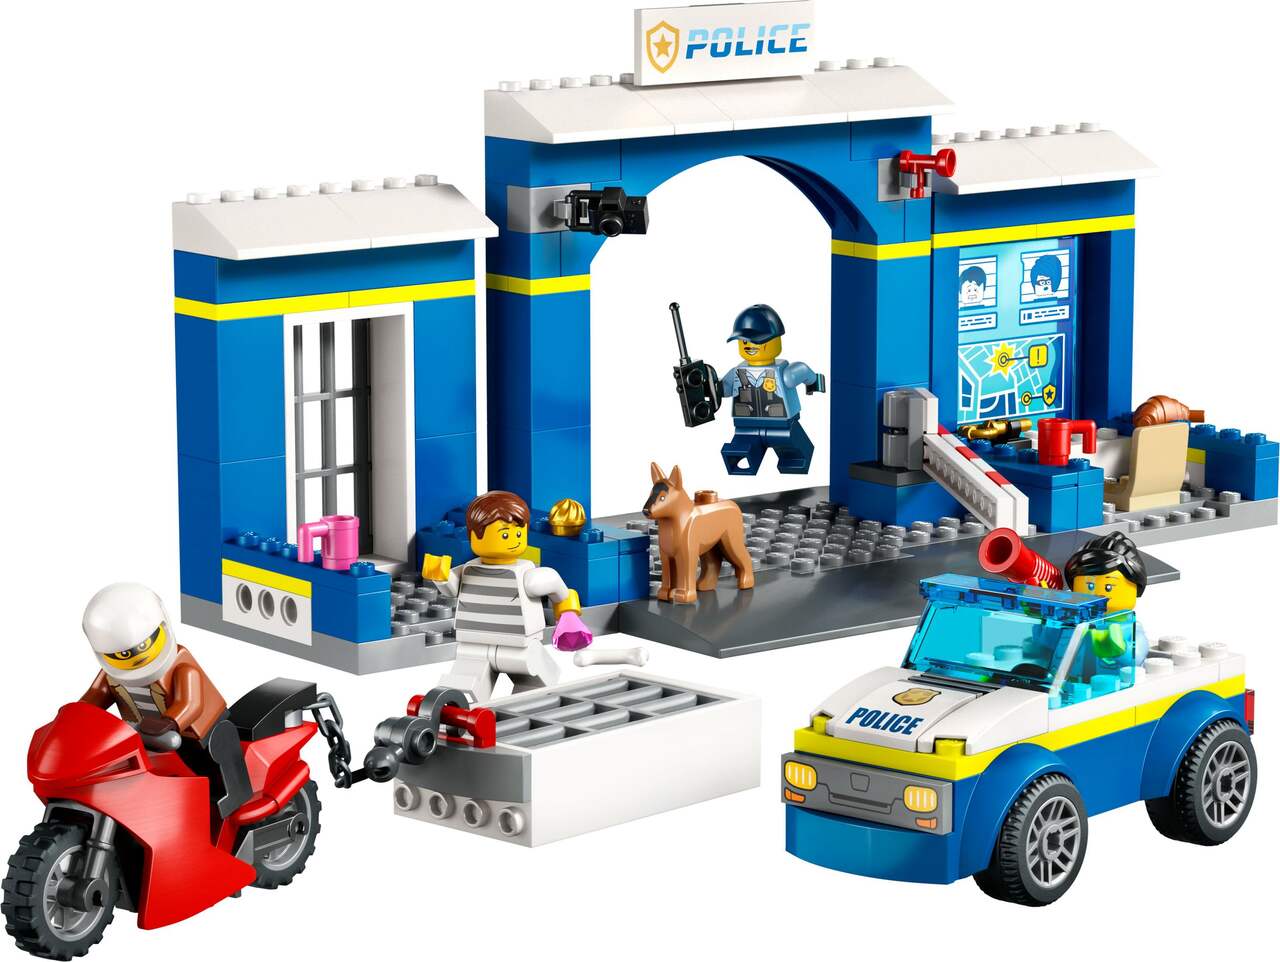 Caméra De Lego Faite De Blocs De Construction Image stock - Image